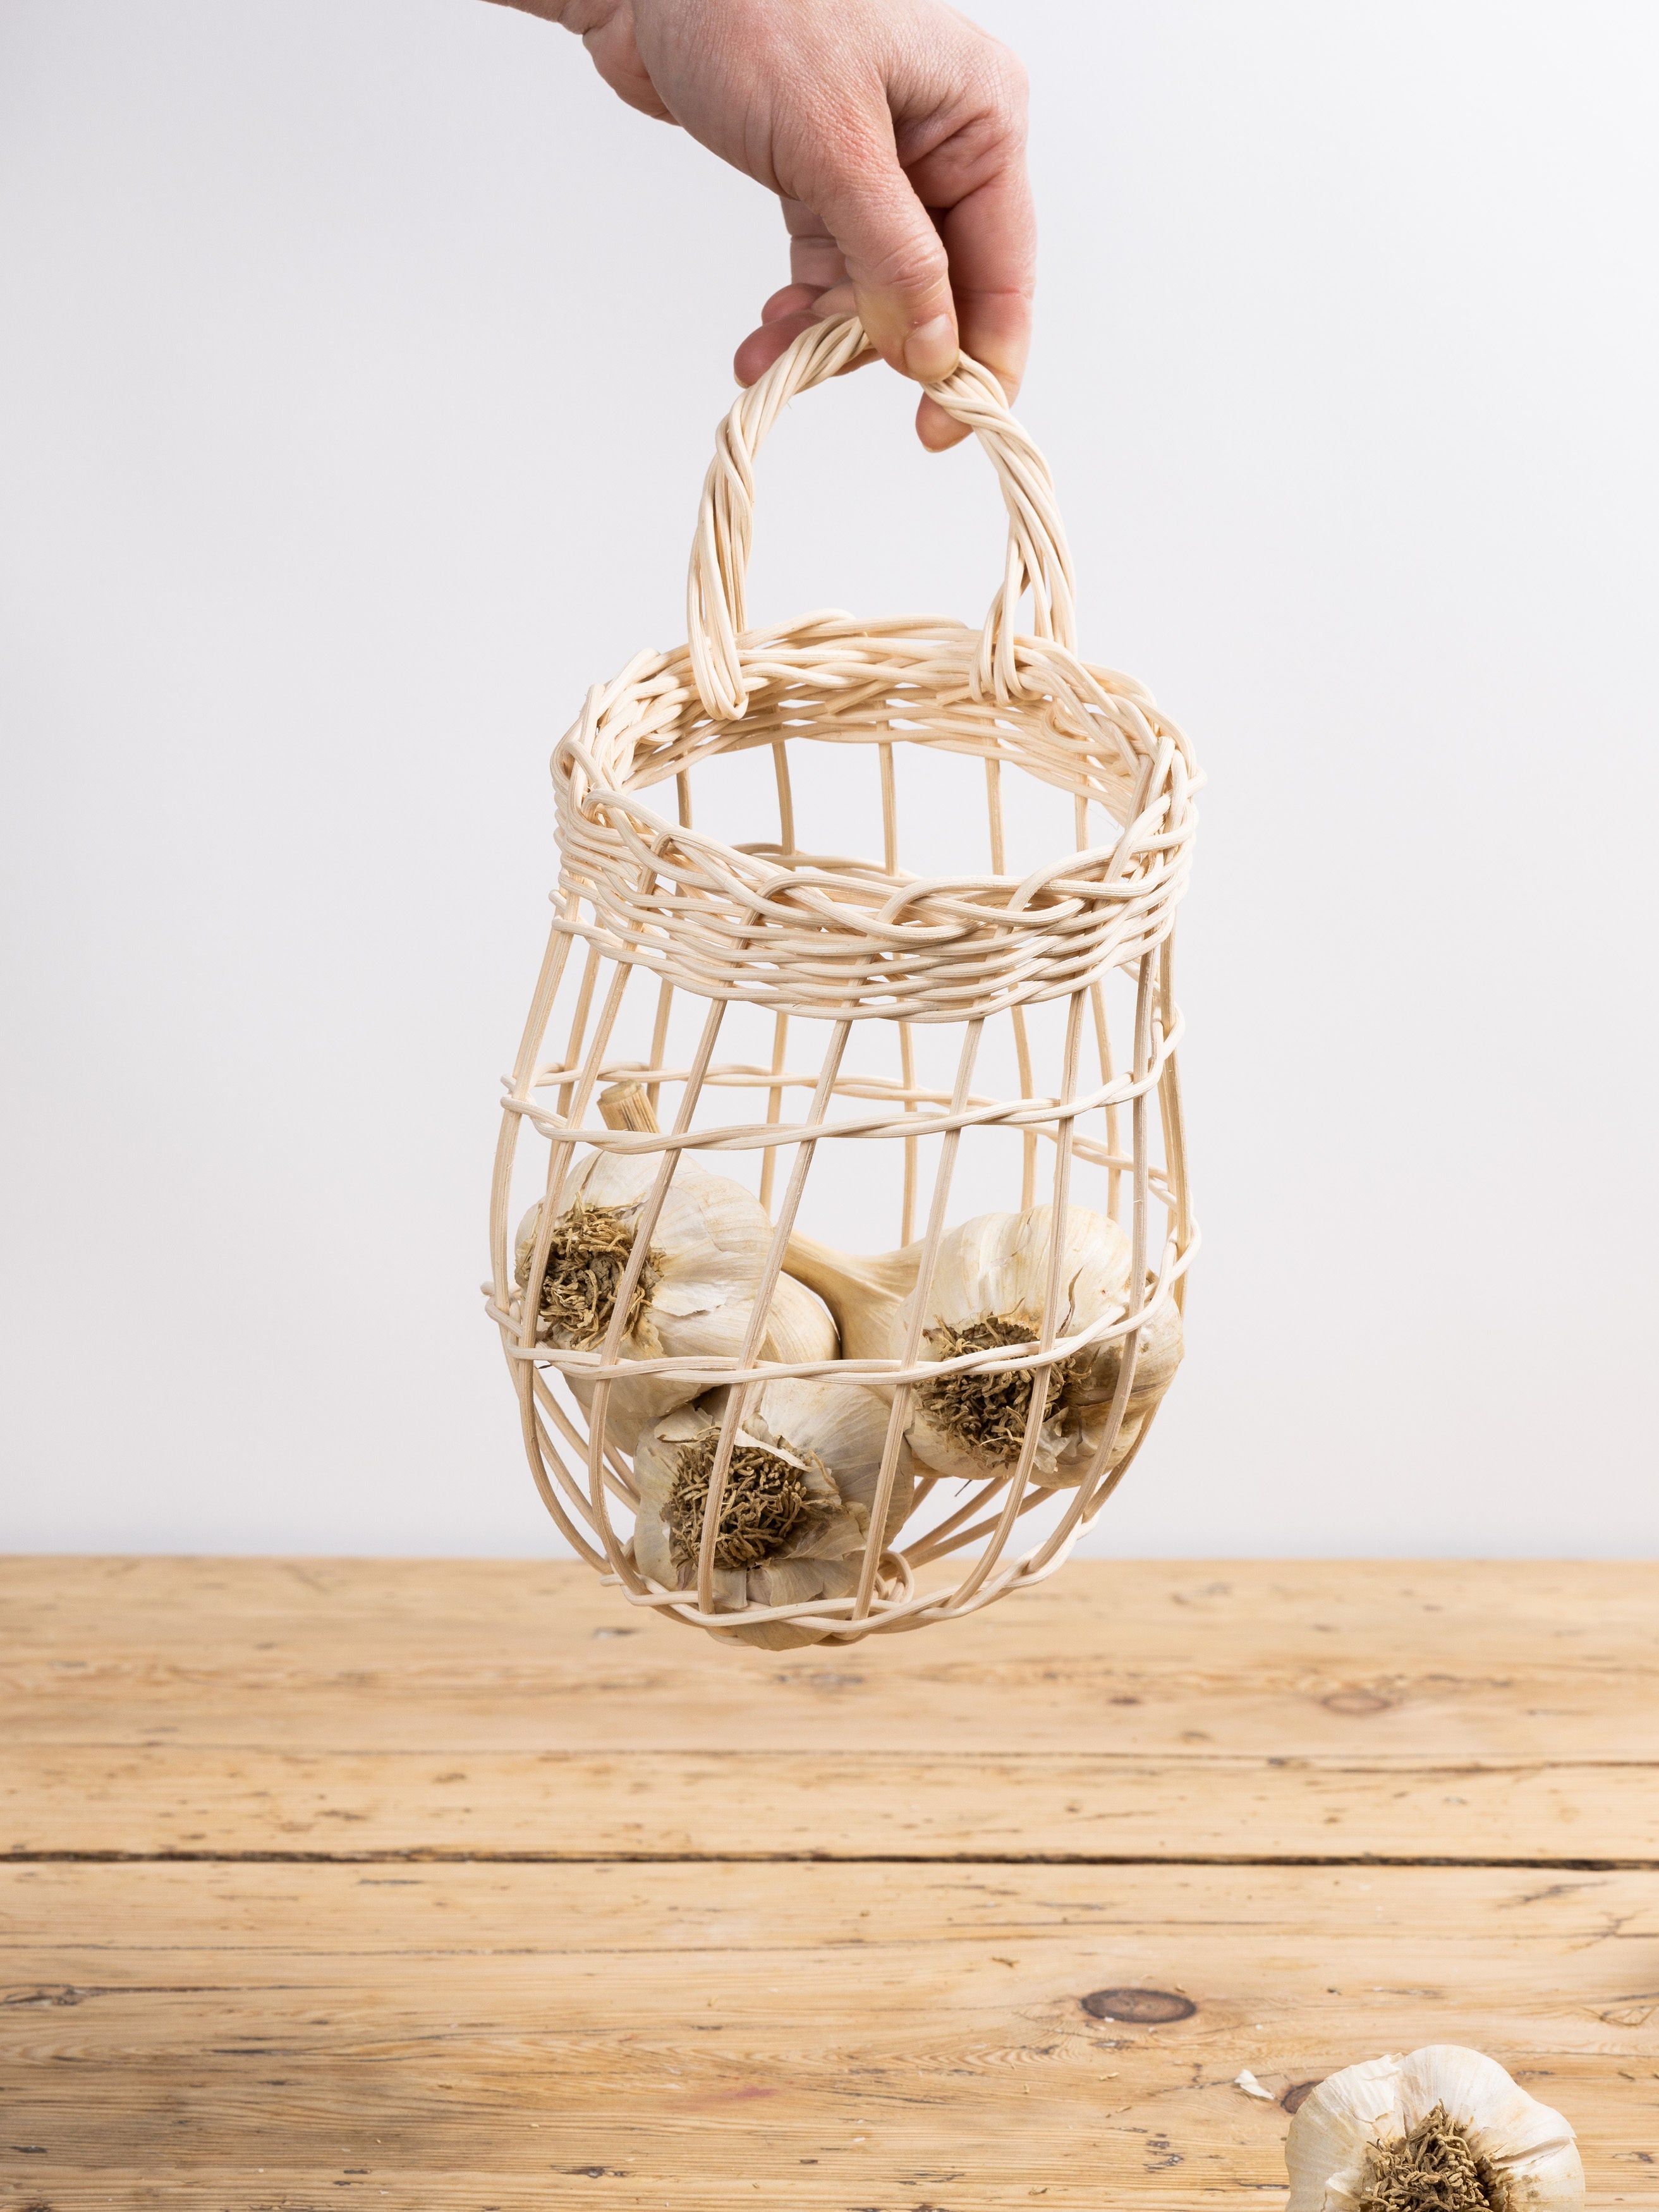 Handmade Natural Rattan Woven Flower Hand Basket Home Kitchen